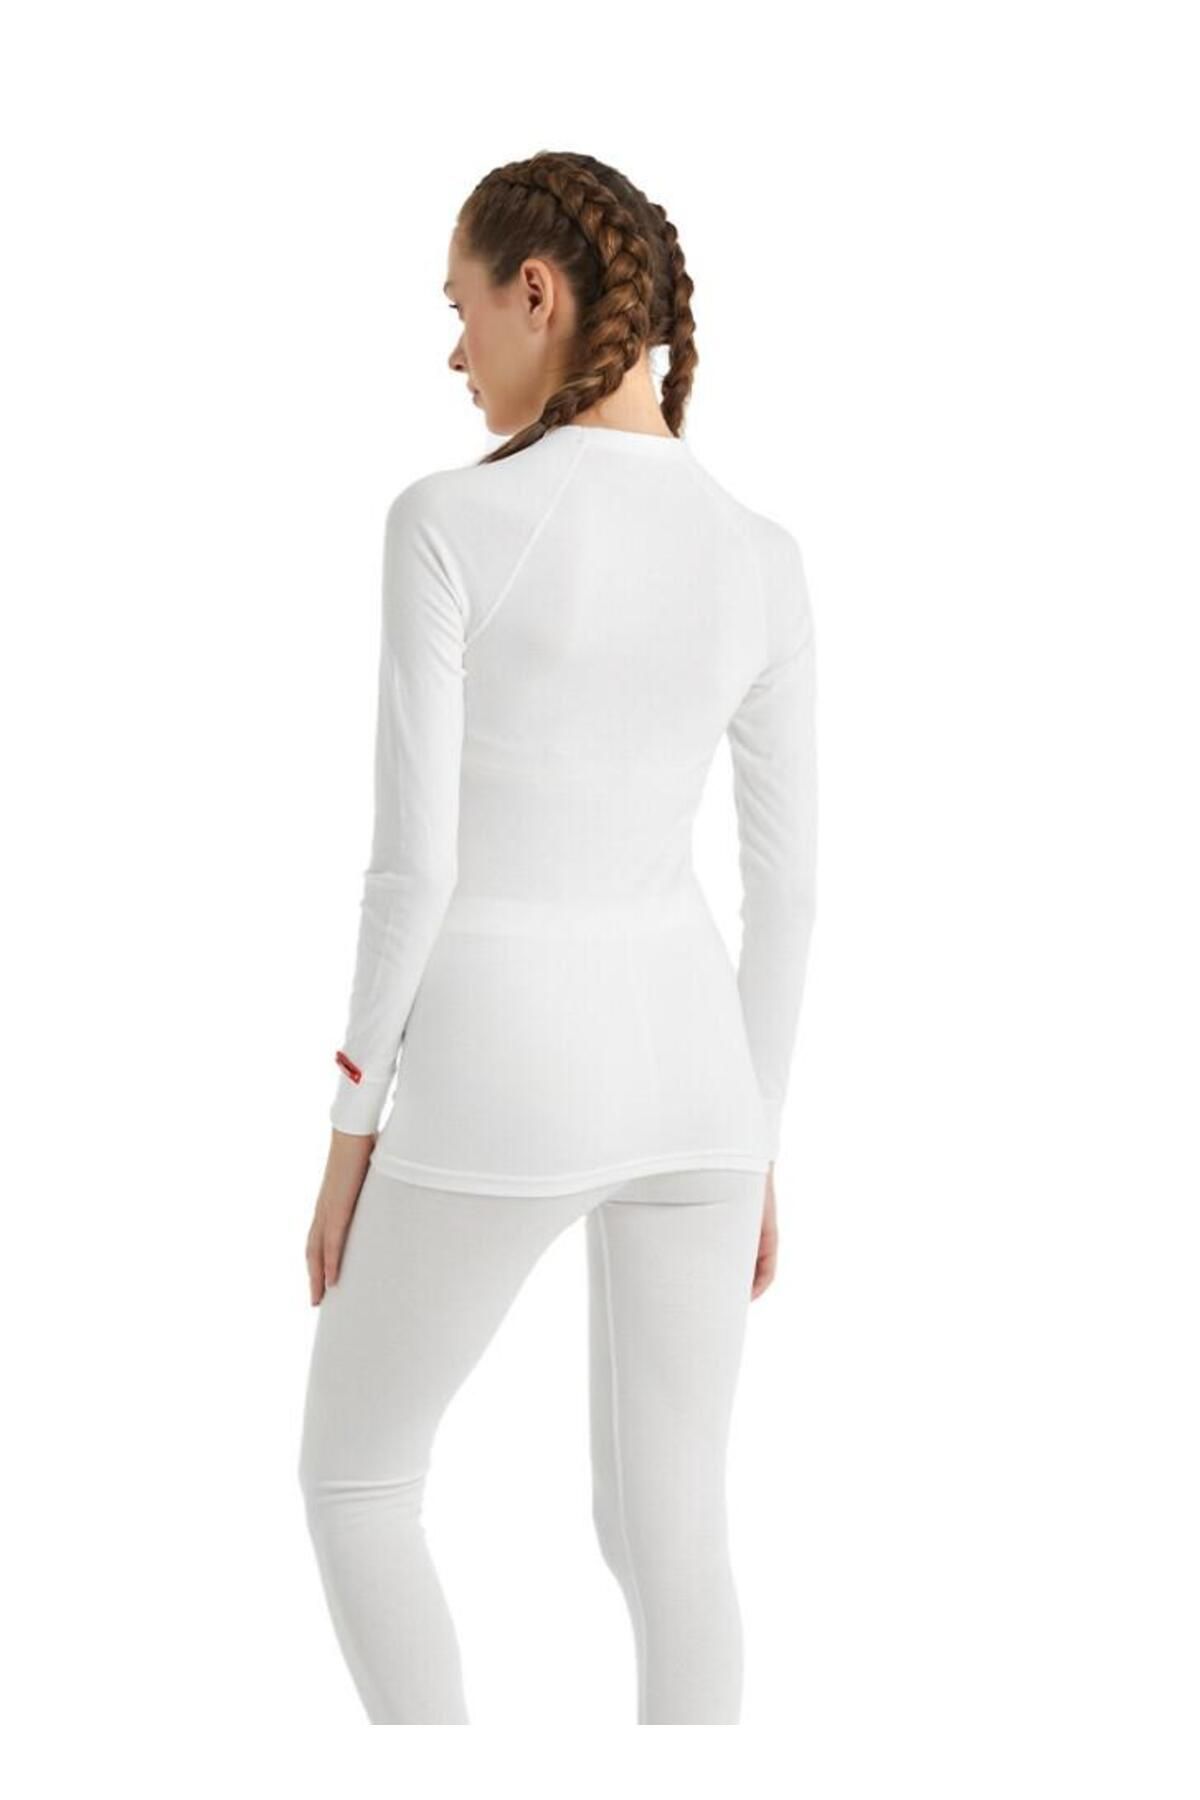 Blackspade 9259 Beyaz Unisex Uzun Kollu Yuvarlak Yaka T-shirt